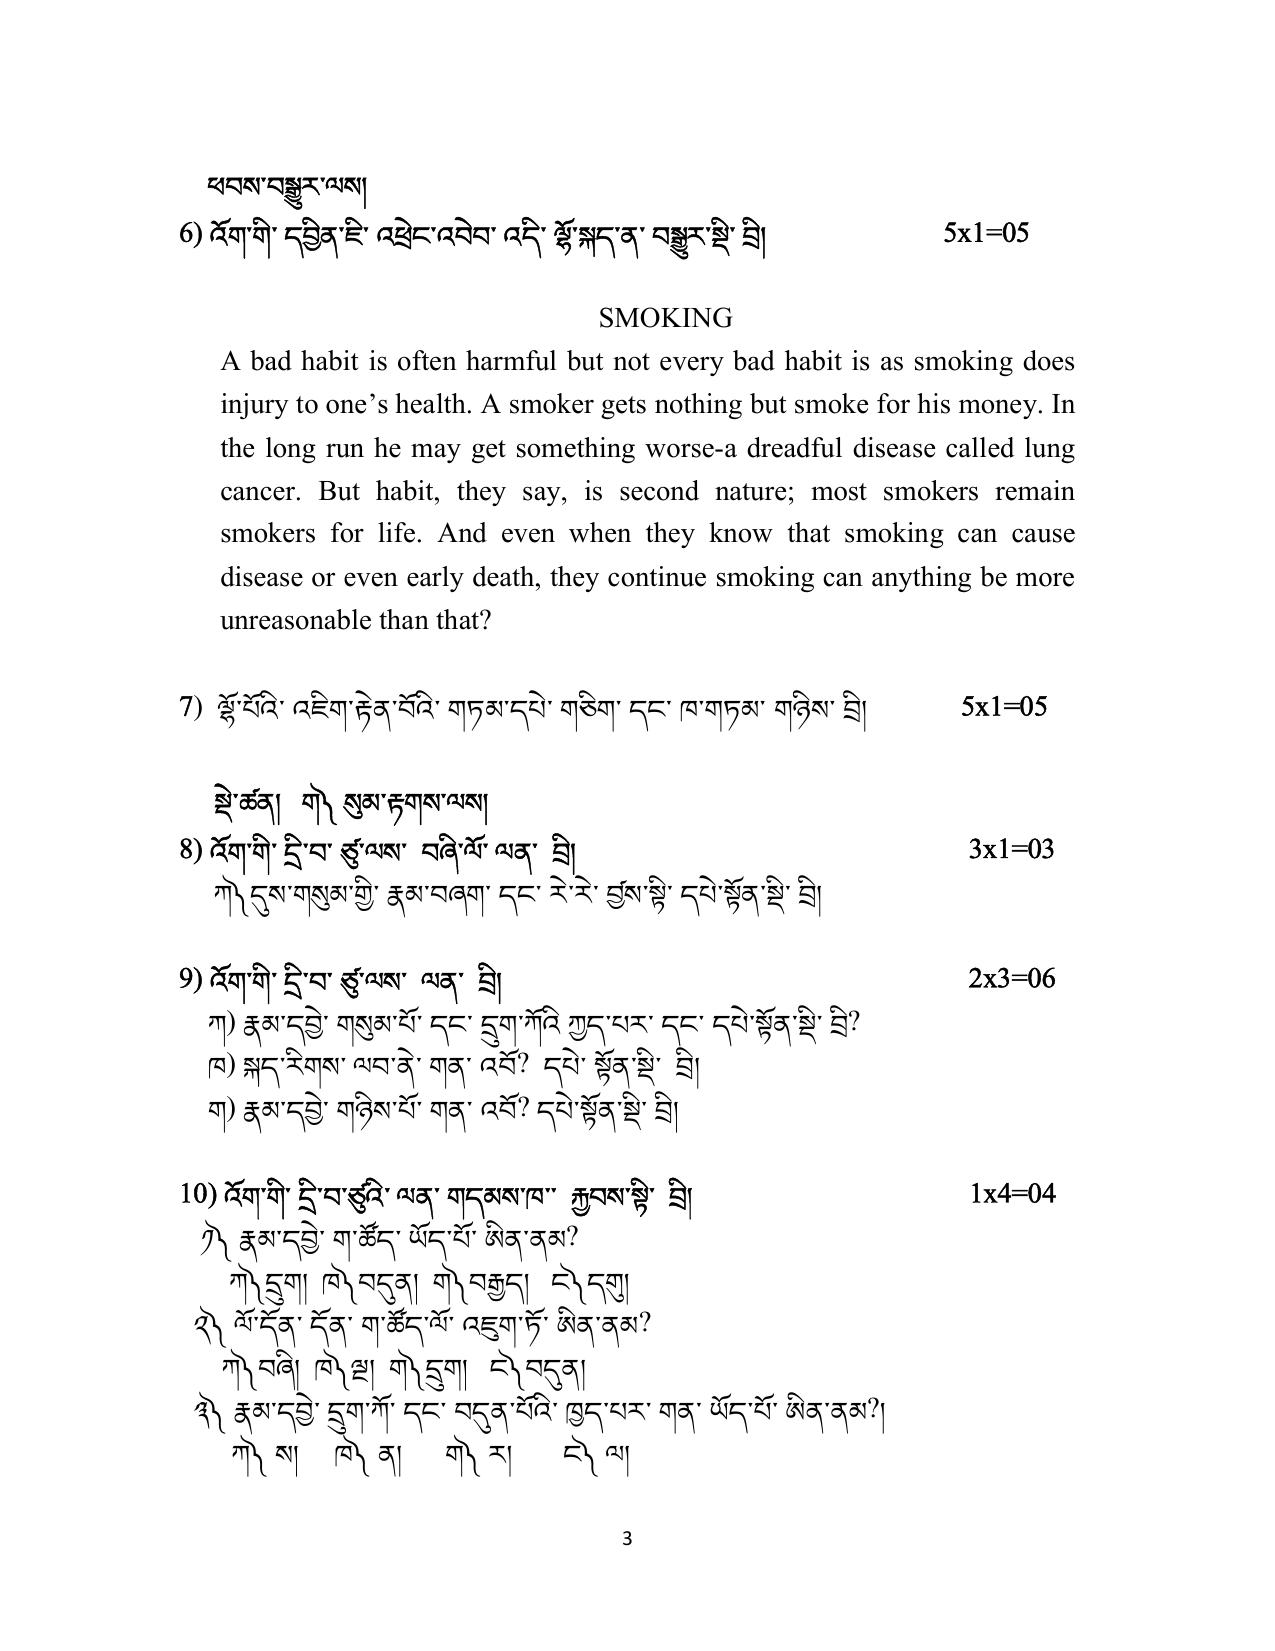 CBSE Class 12 Bhutia Skill Education-Sample Paper 2019-20 - Page 3